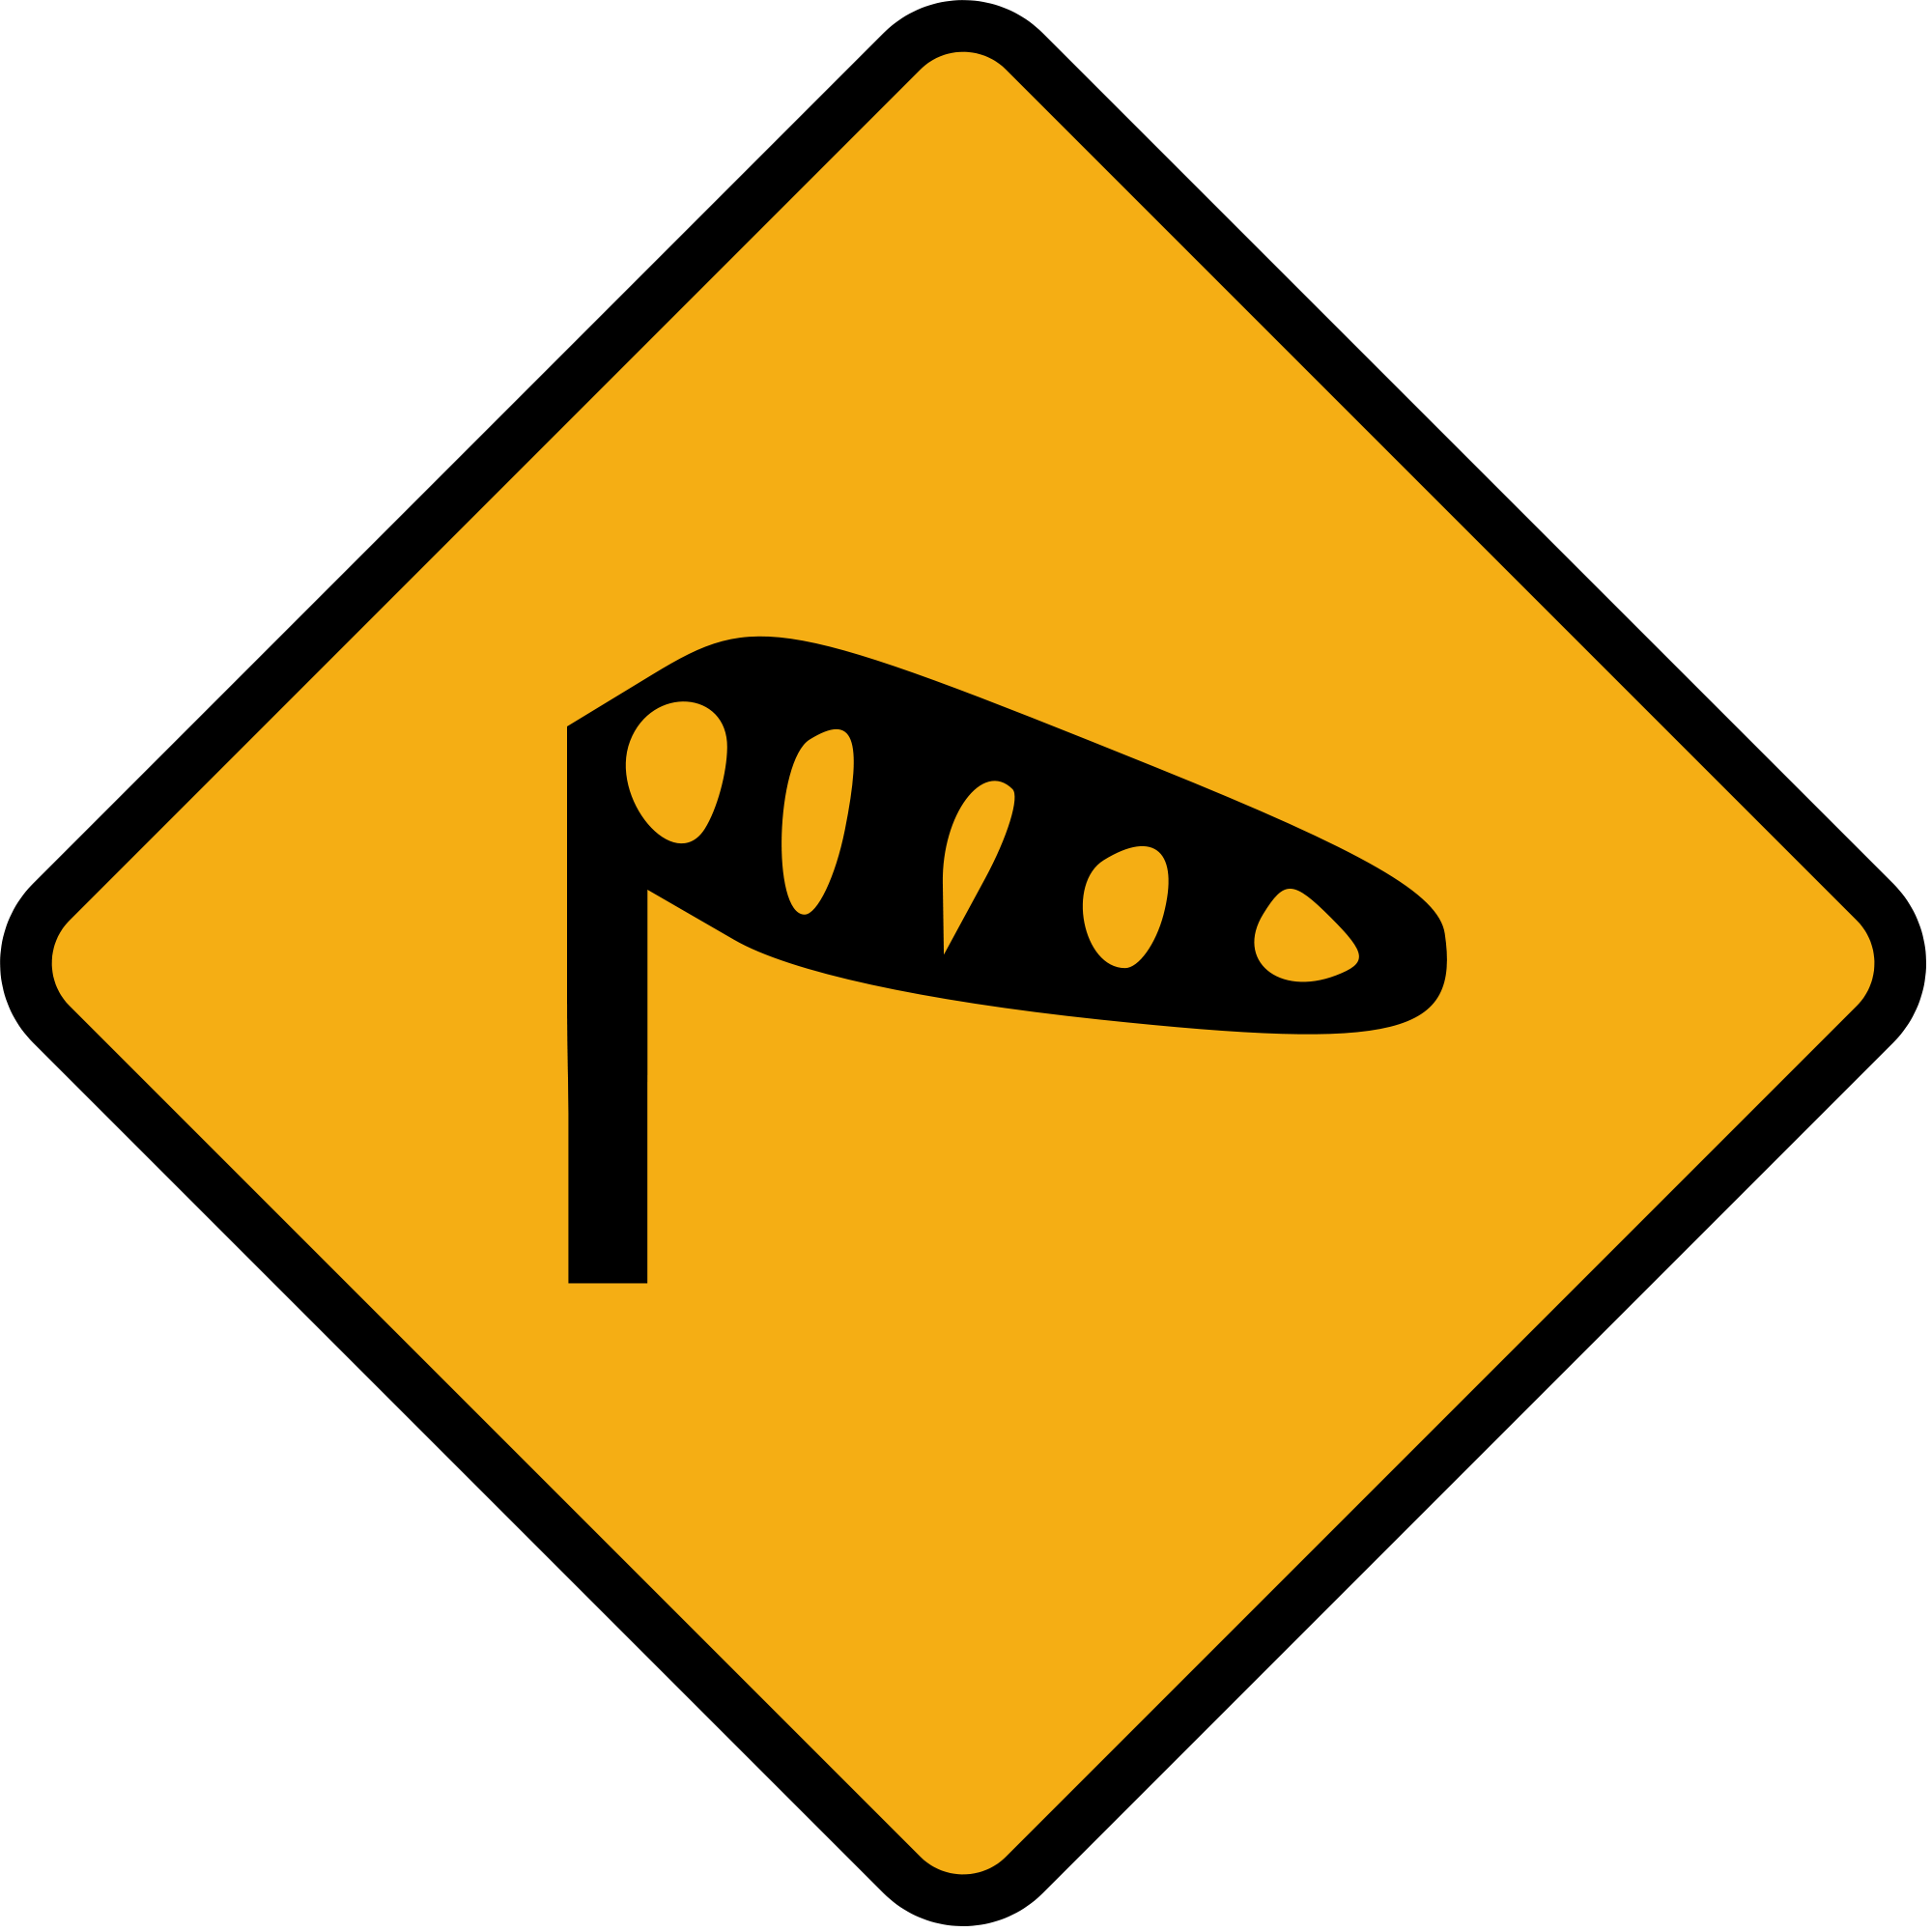 diamond clipart road sign